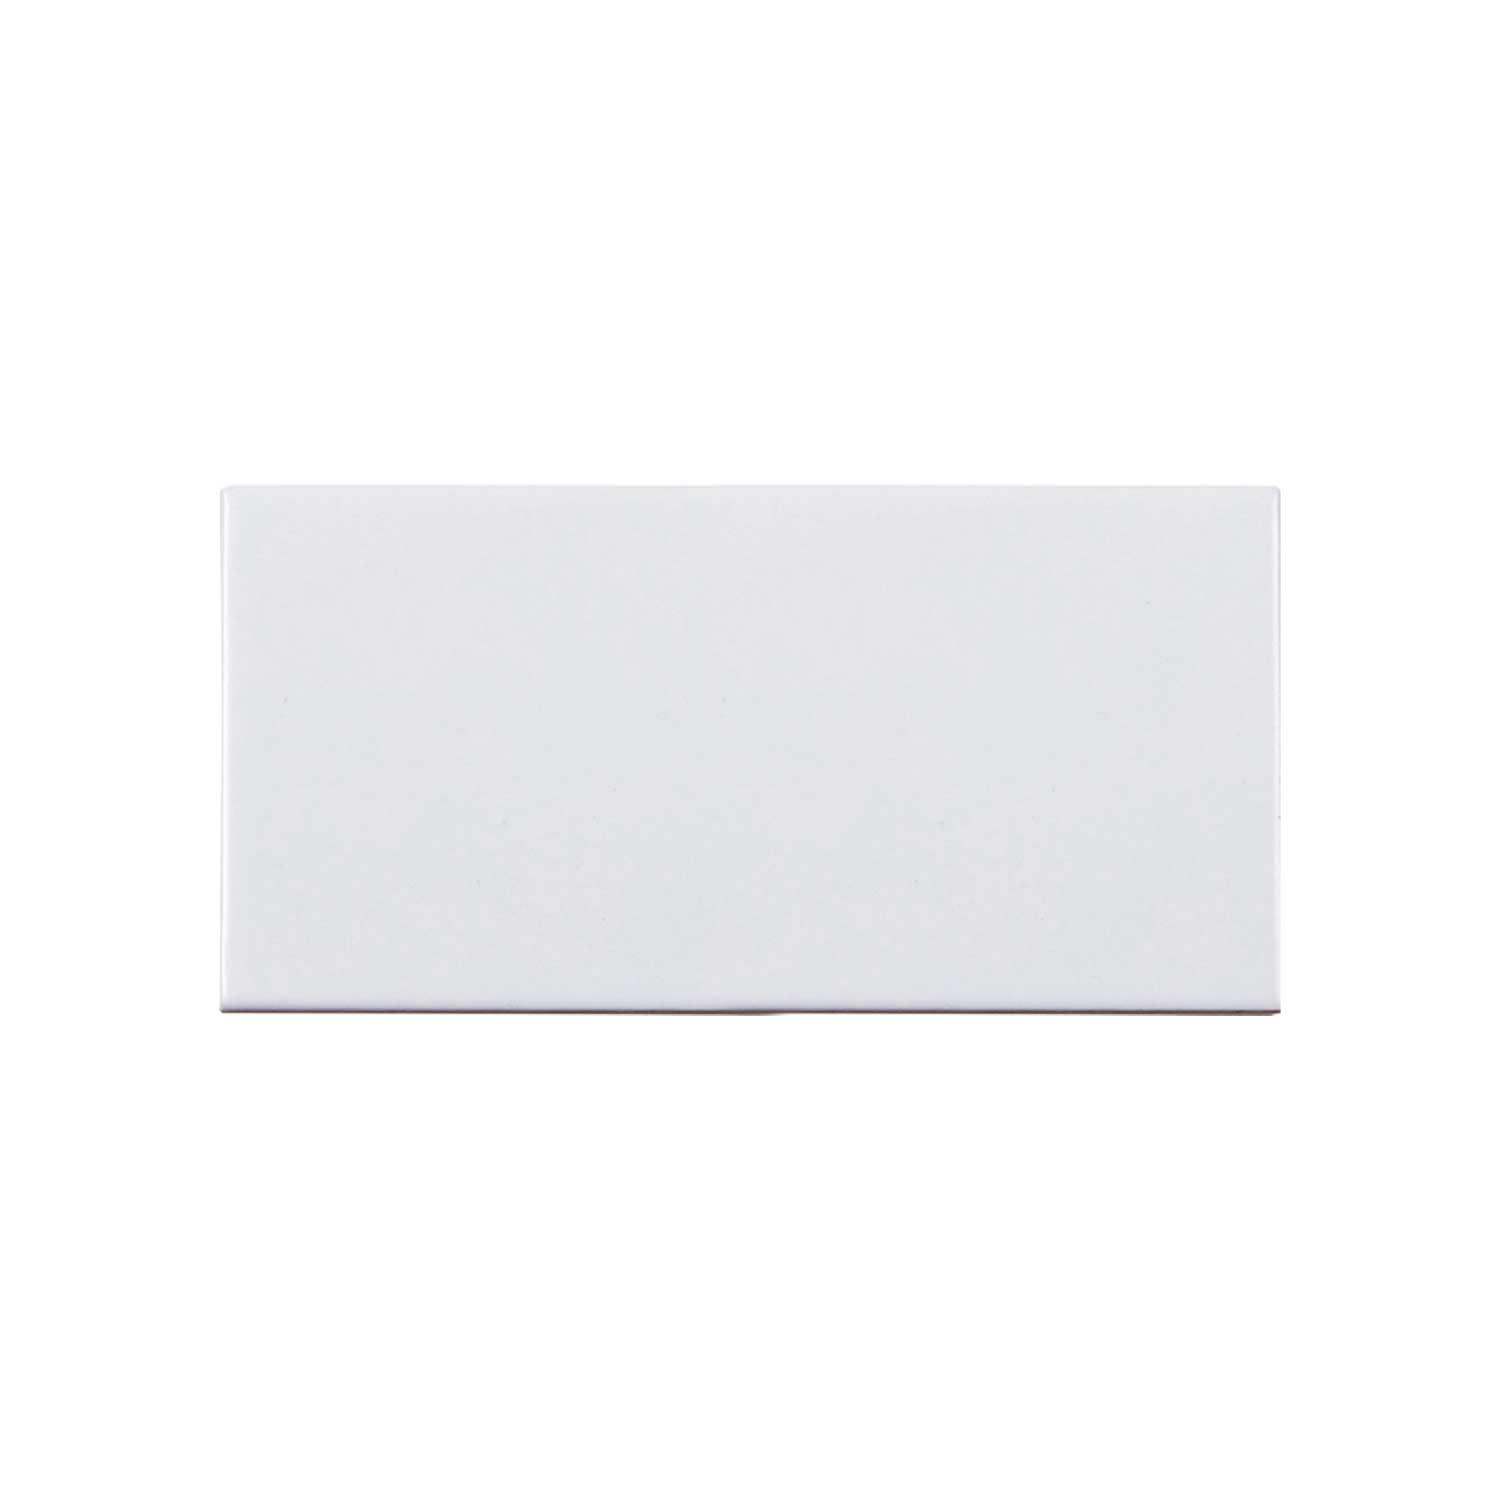 Classic Gloss White Ceramic Wall Tile Rectangle 100x200mm